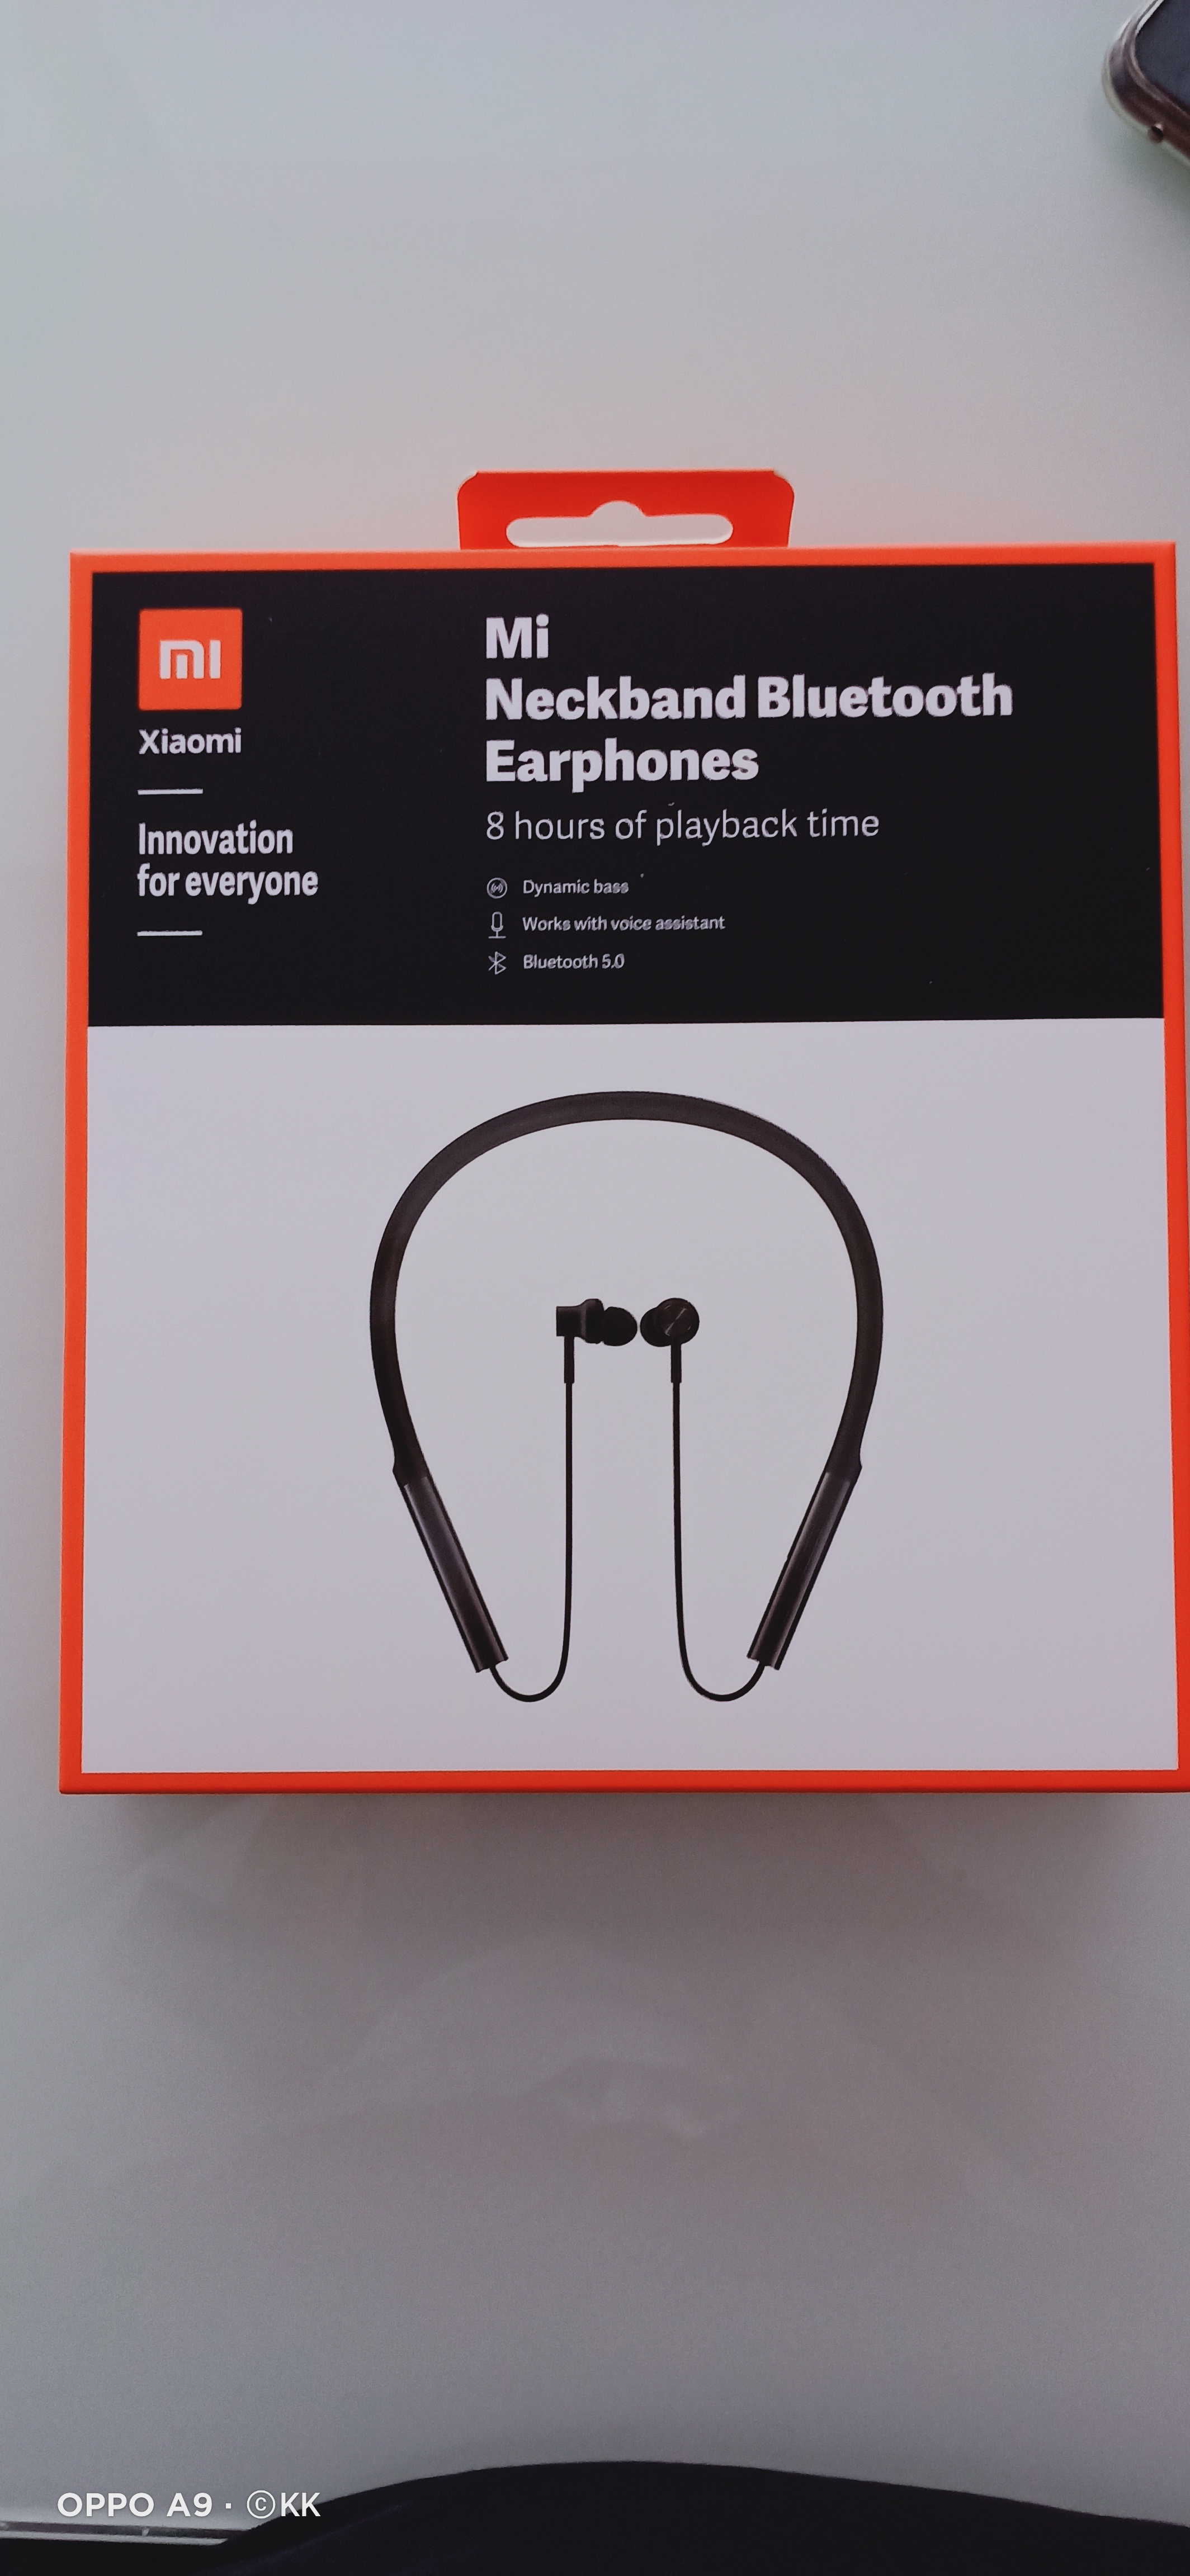 Mi Neckband Bluetooth Earphone image